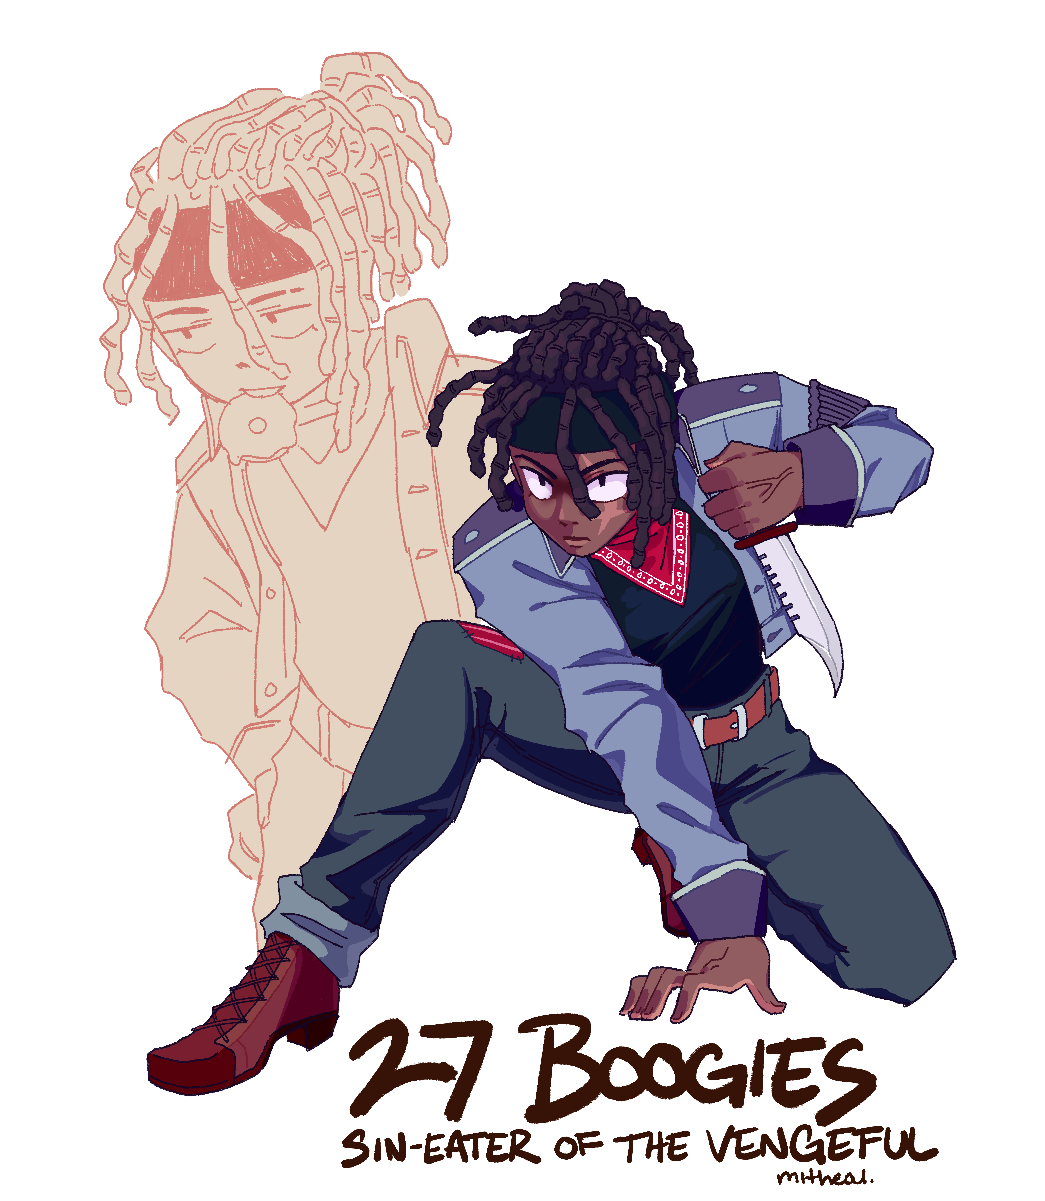 Art of original character 27 Boogies.